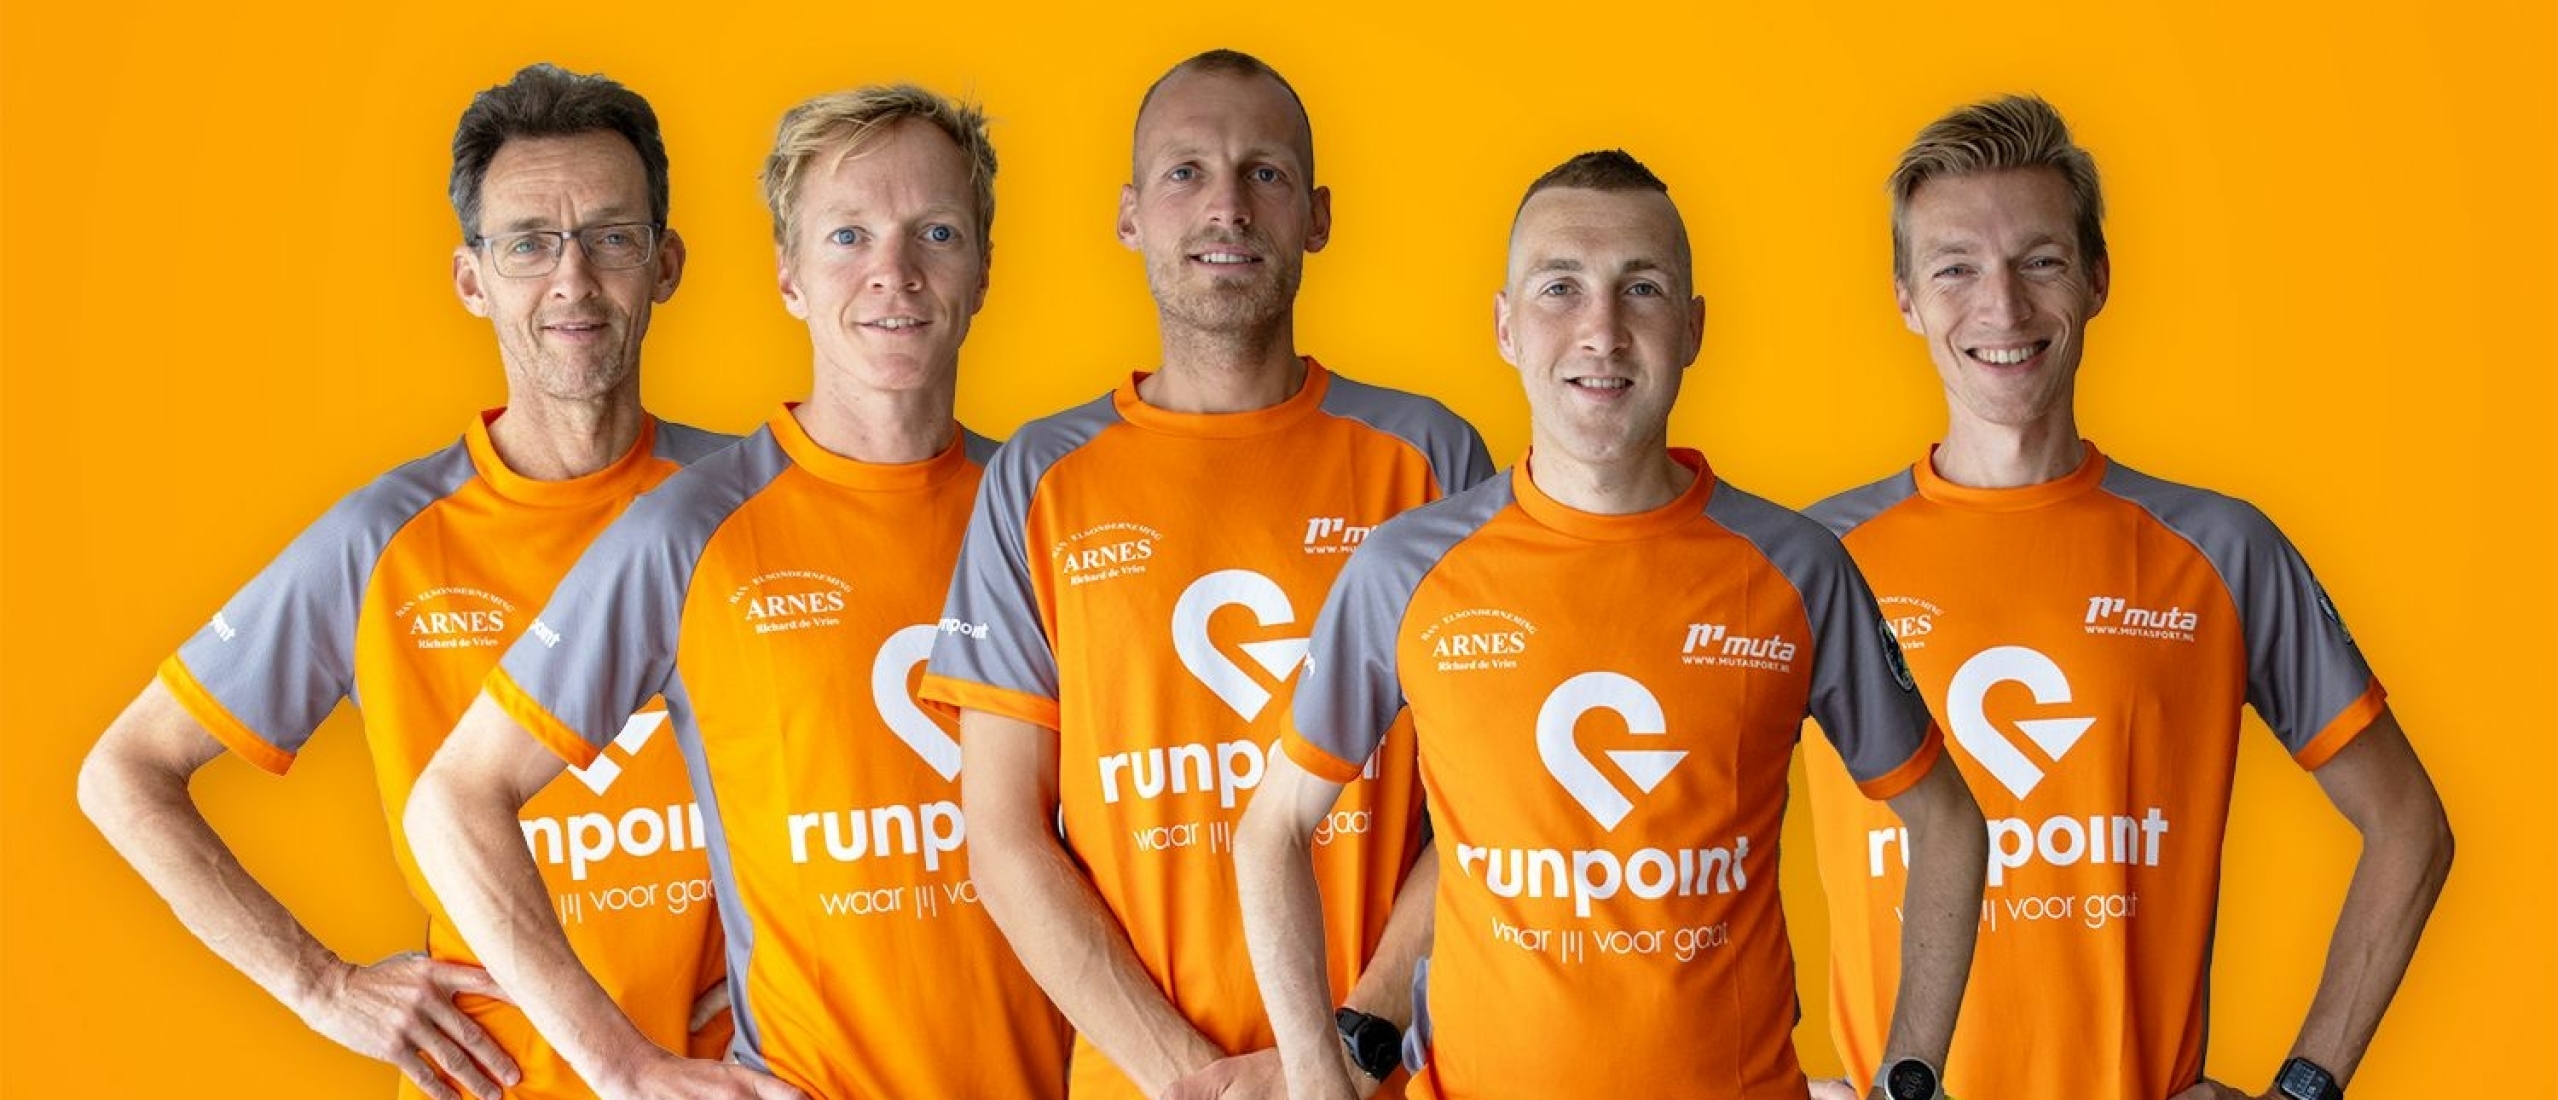 runpoint racing team